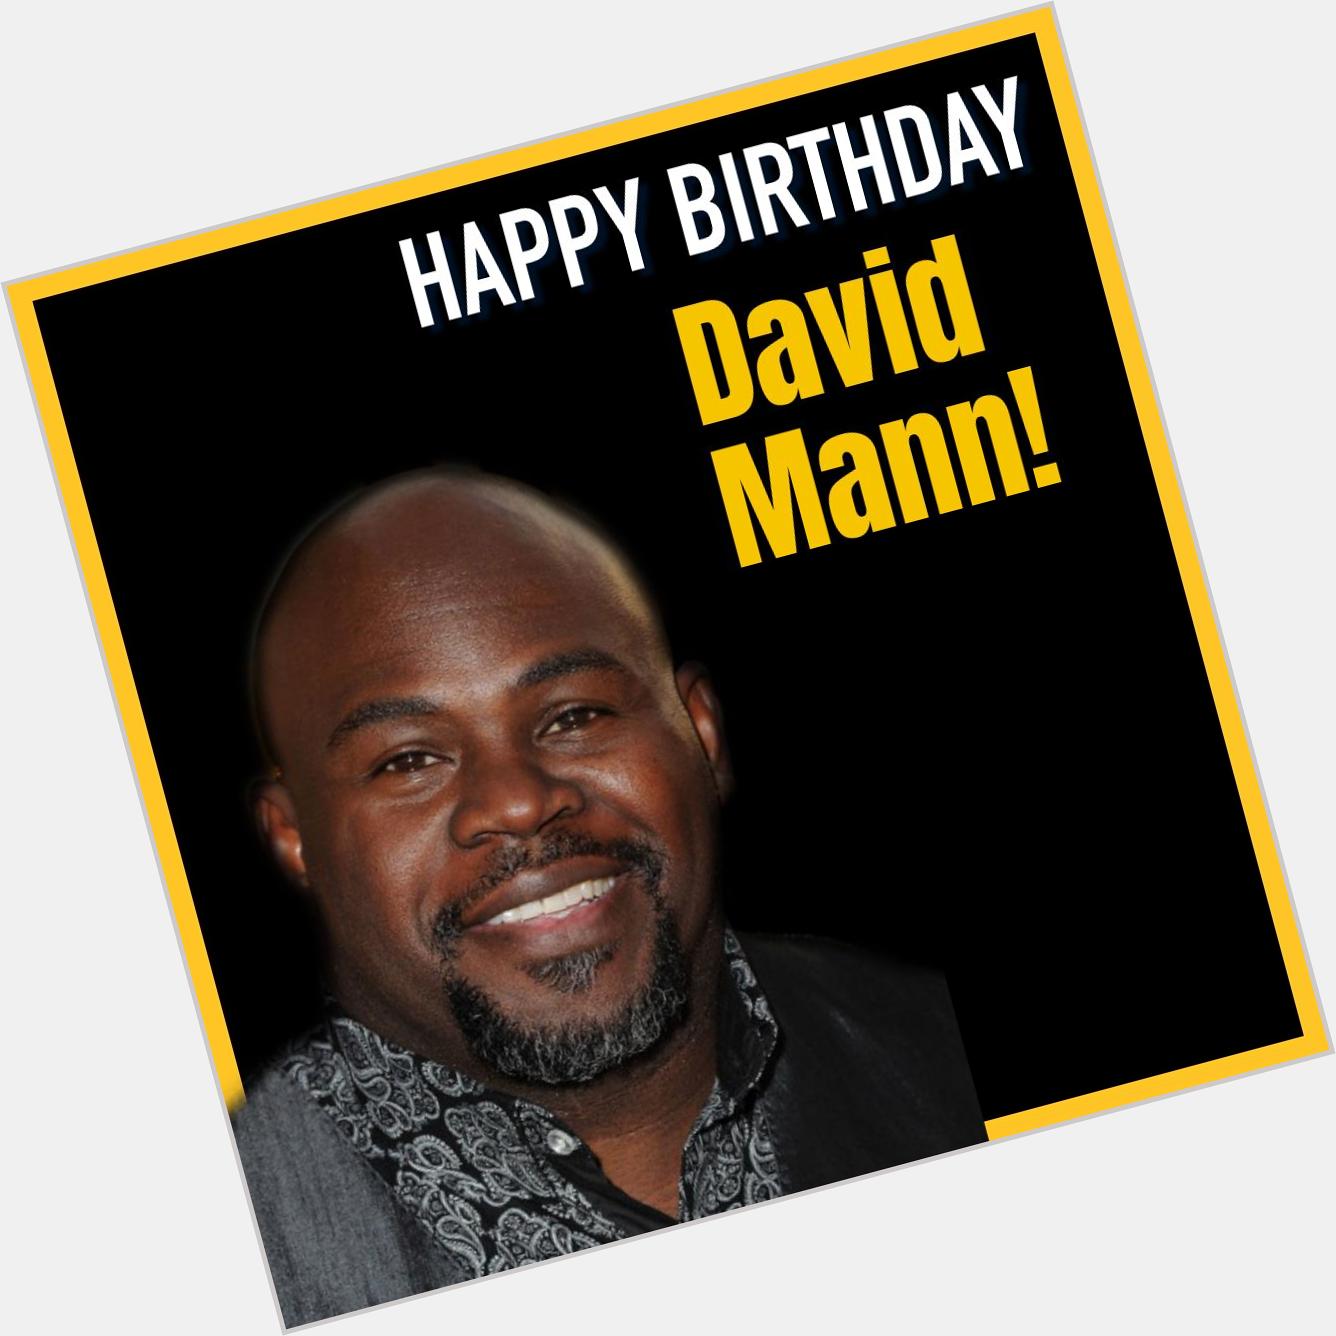 Happy birthday David Mann!  